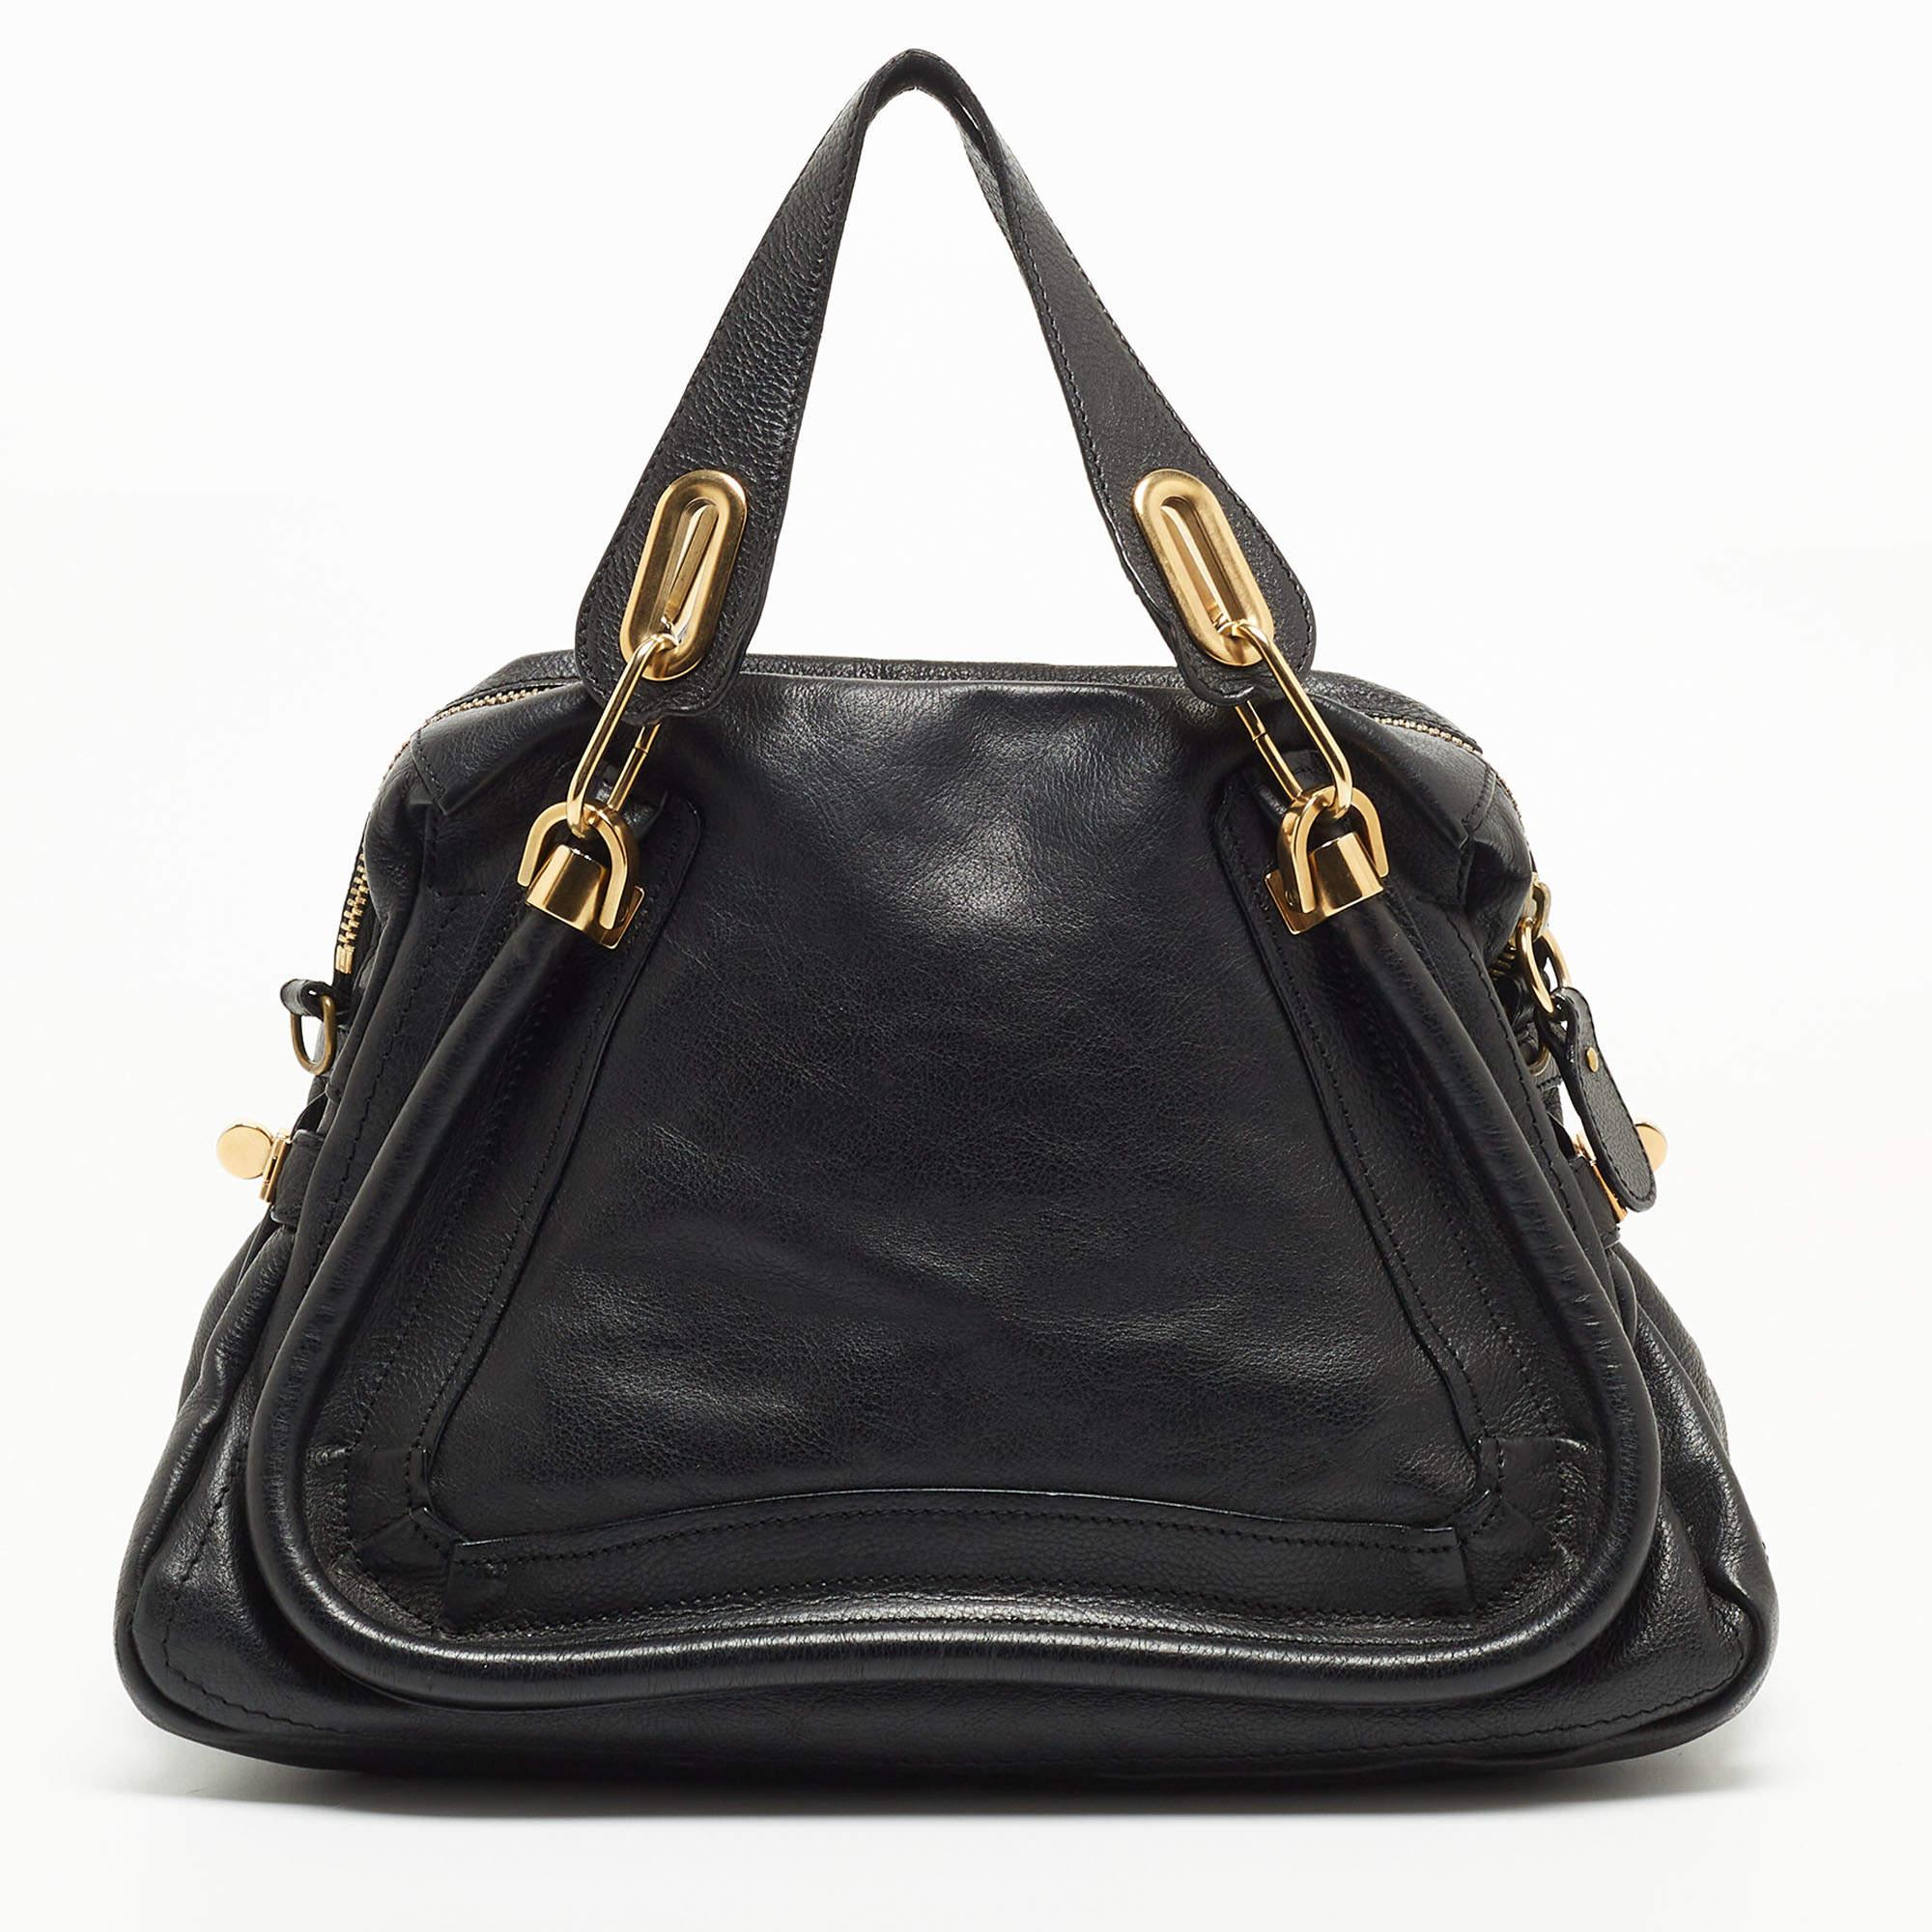 Chloe Black Leather Medium Paraty Shoulder Bag 10